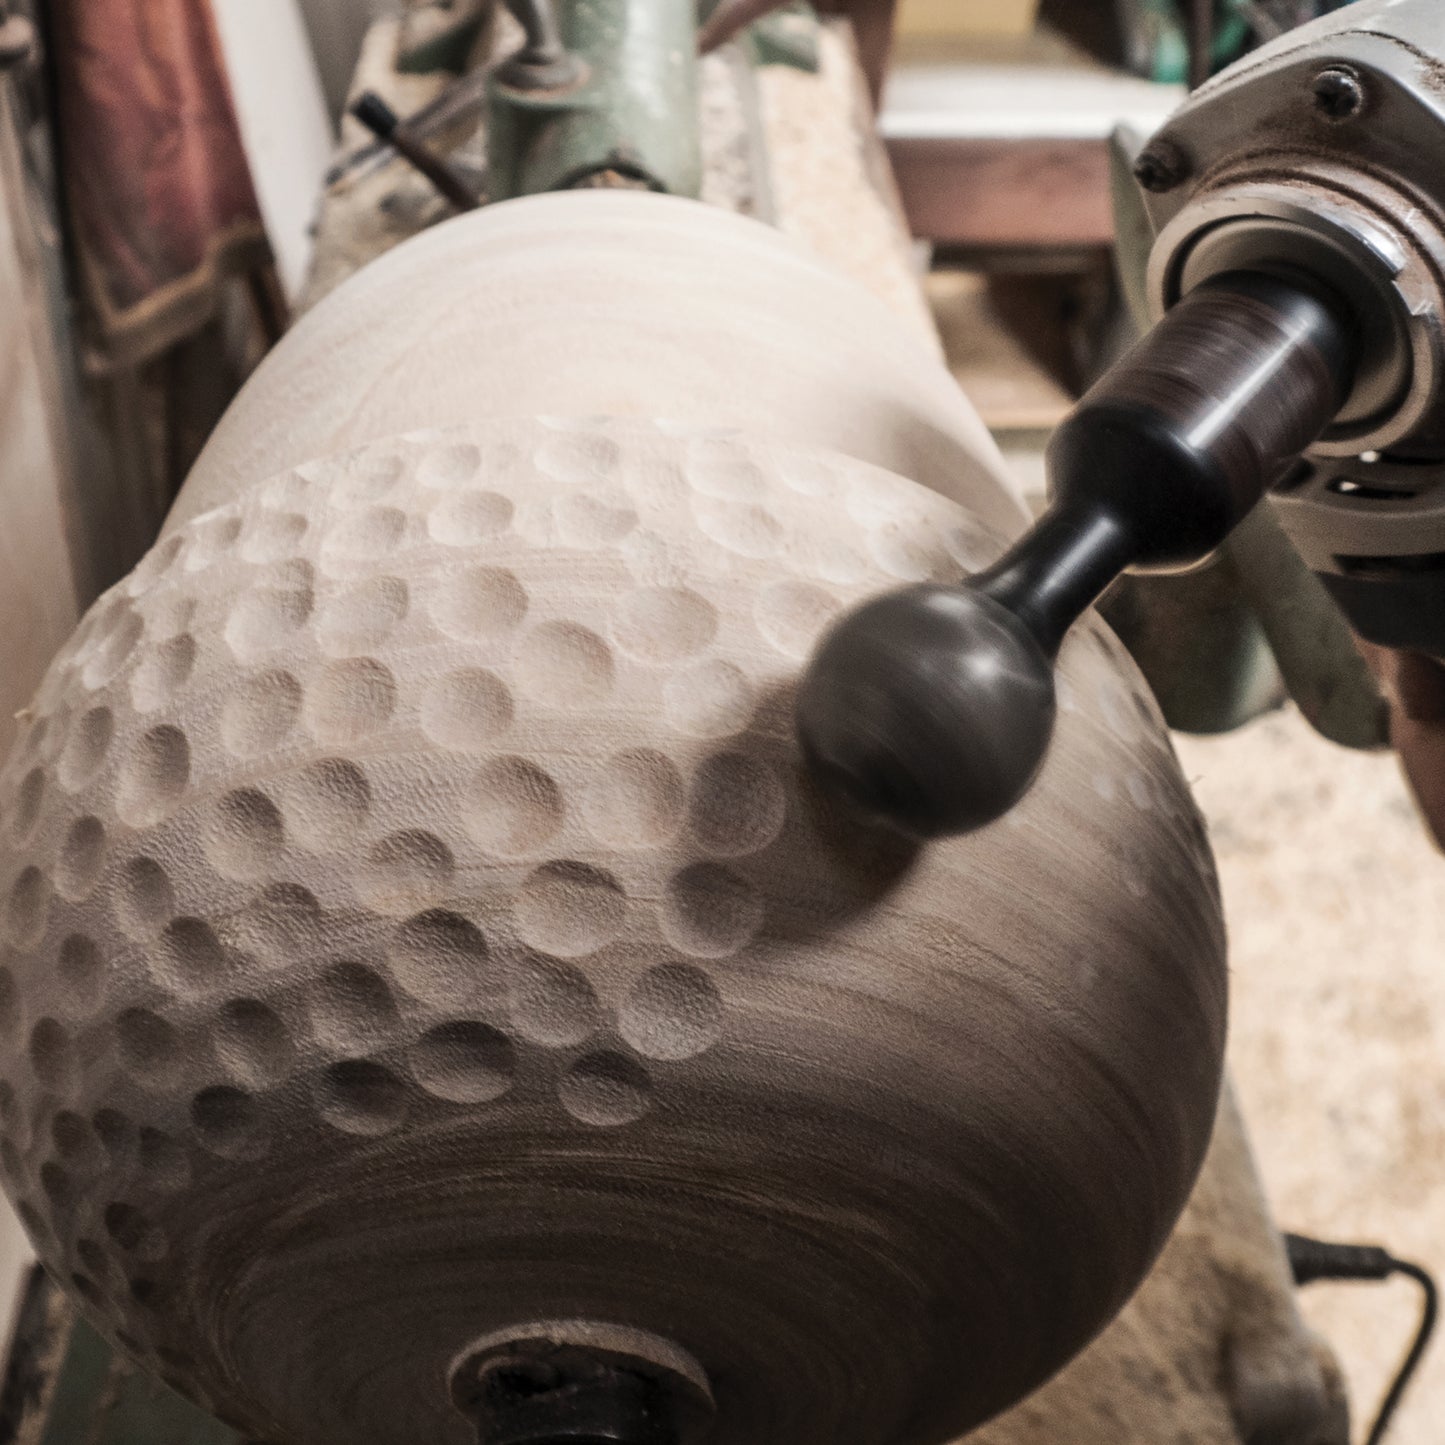 Arbortech Power Carving Ball Gouge